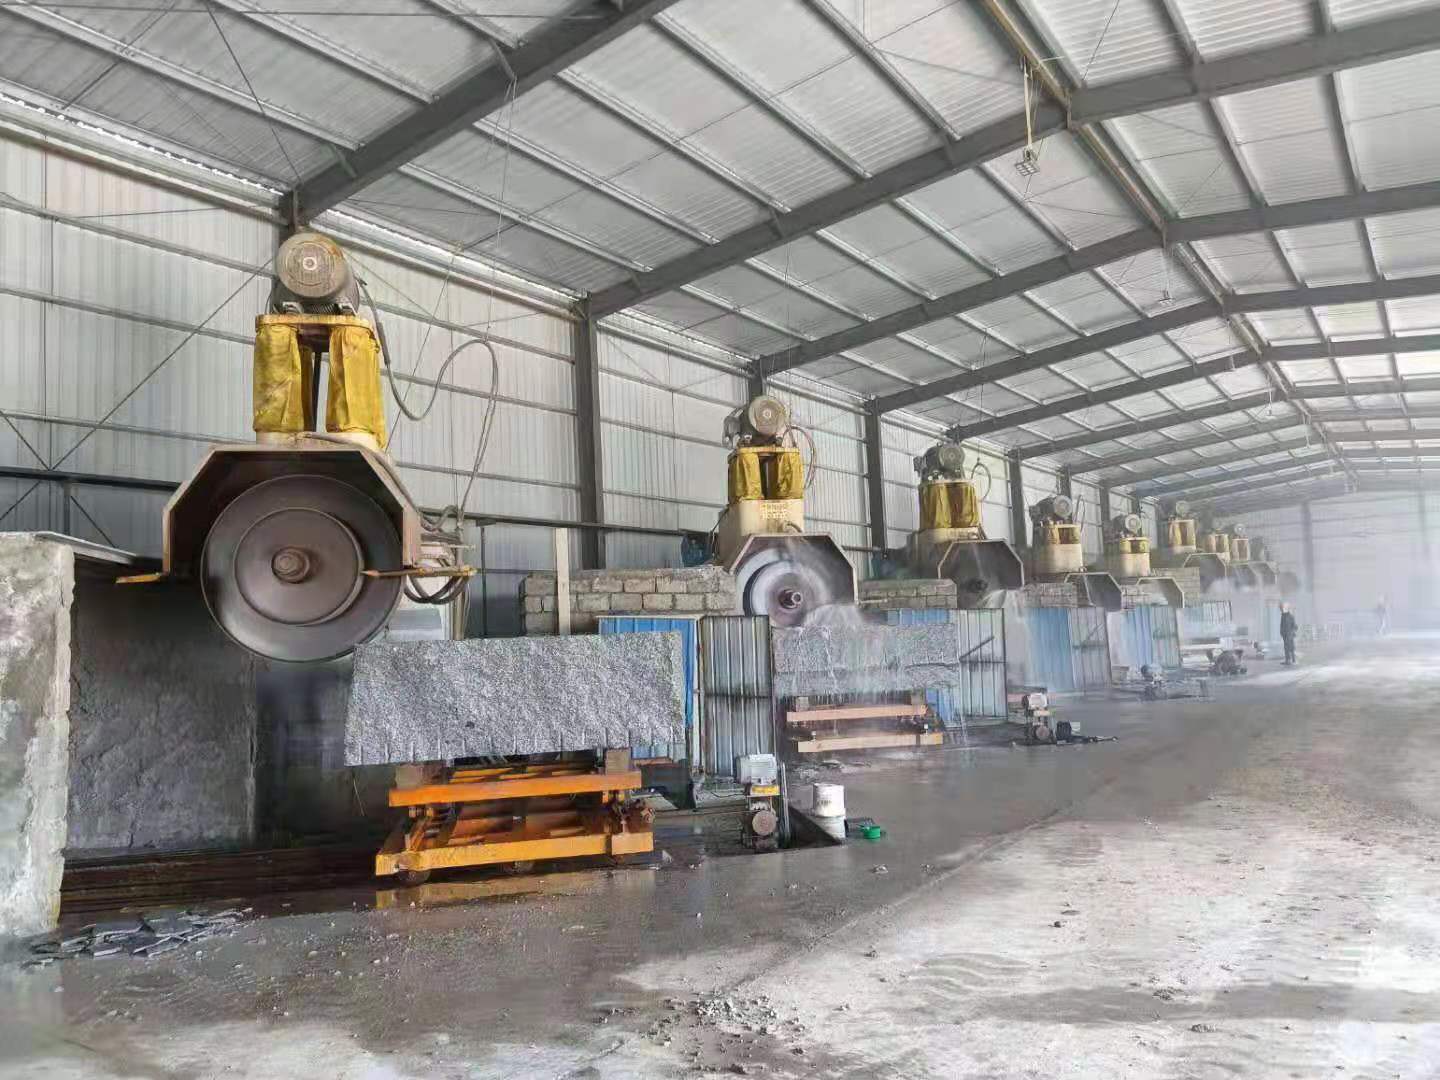 Máquina cortadora de bloques de puente de granito Máquina cortadora de piedra de hojas múltiples HLQY-2500 HuaLong Machinery